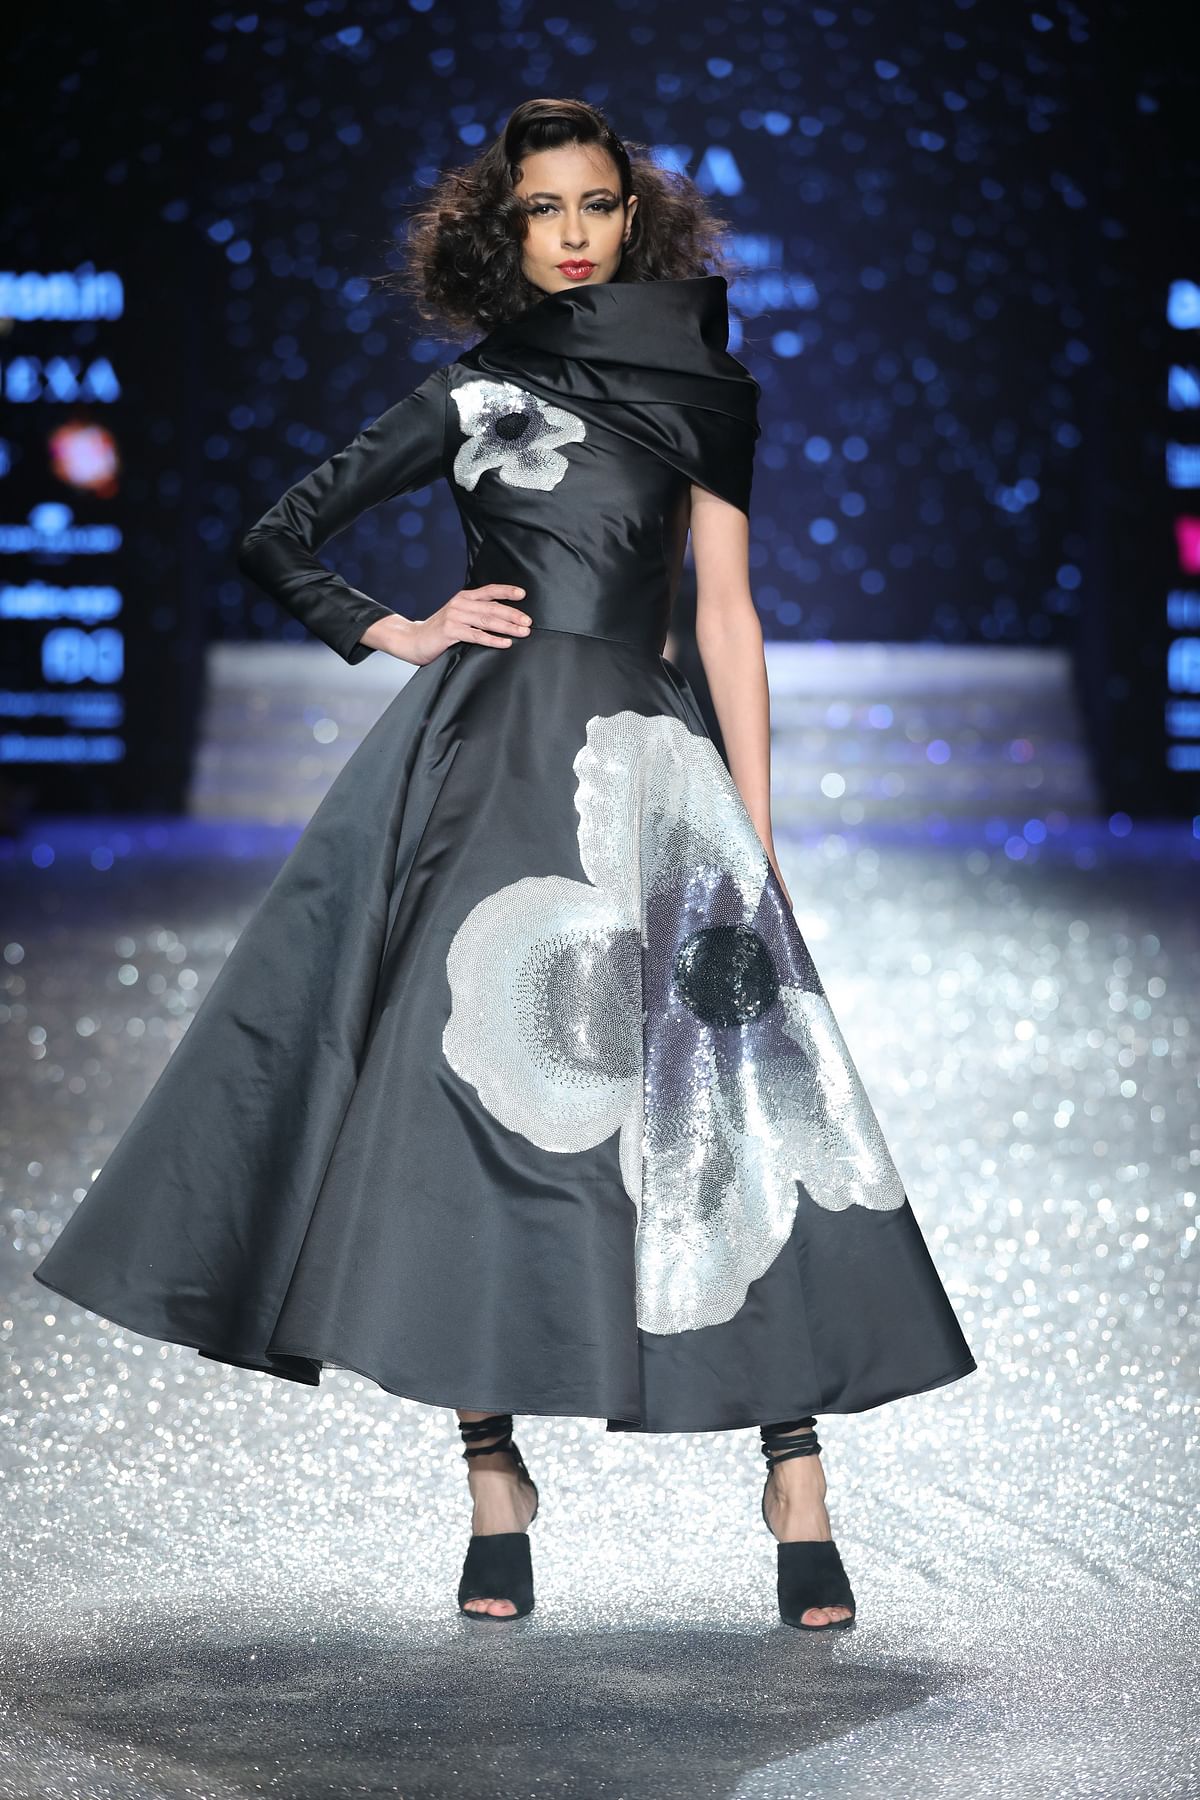 Vaani Kapoor channels the Bond girl vibe for designers Gauri and Nainika, Ashish N Soni at Amazon India Fashion Week